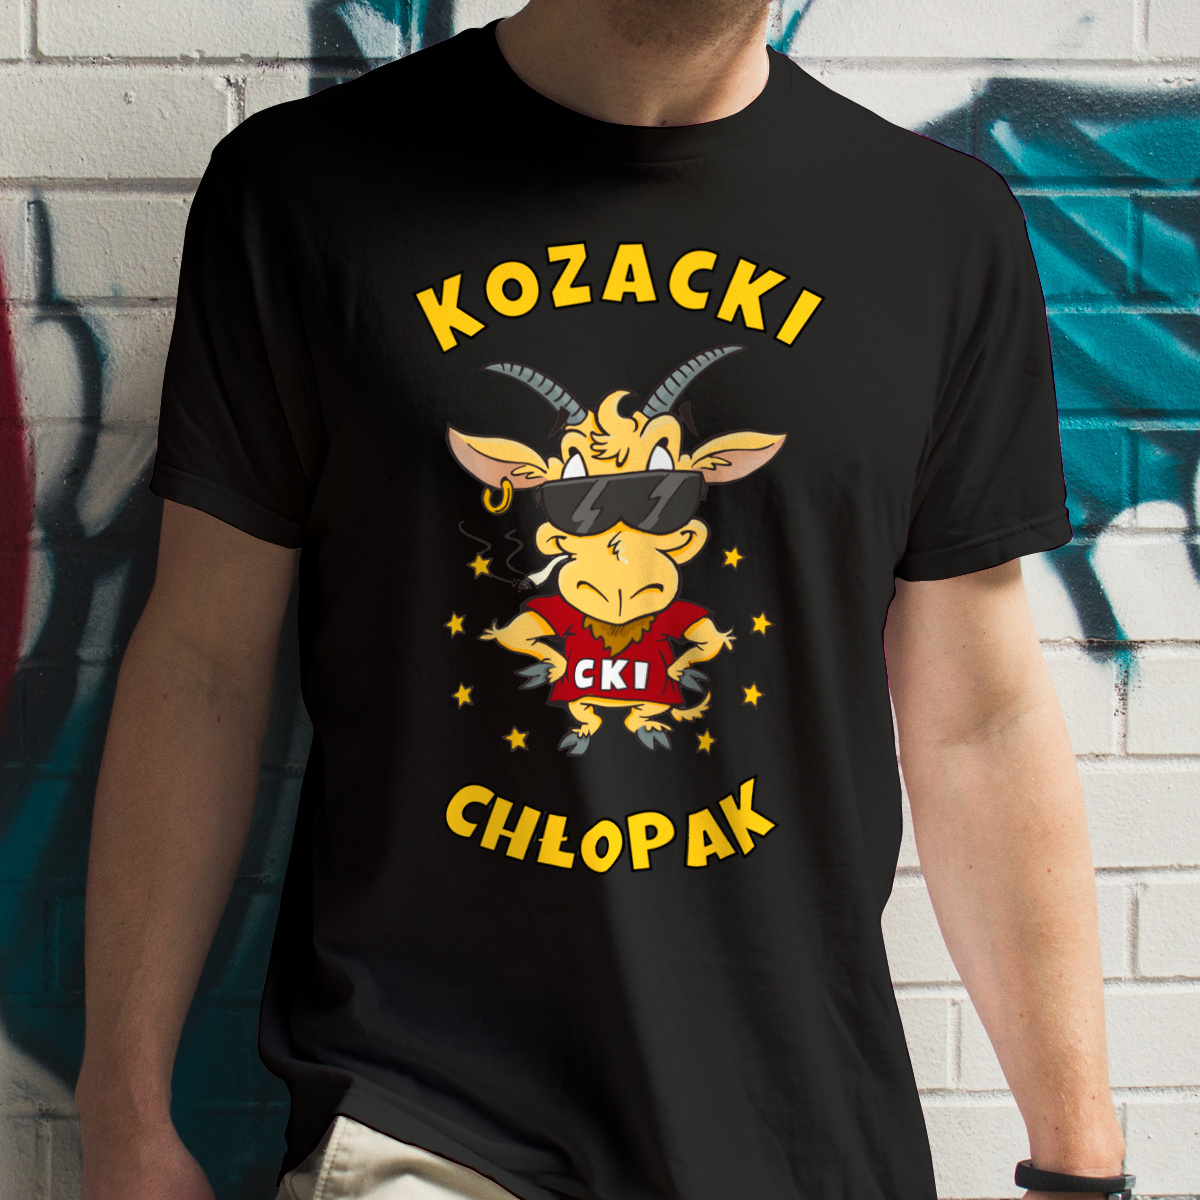 Kozacki Chłopak - Męska Koszulka Czarna